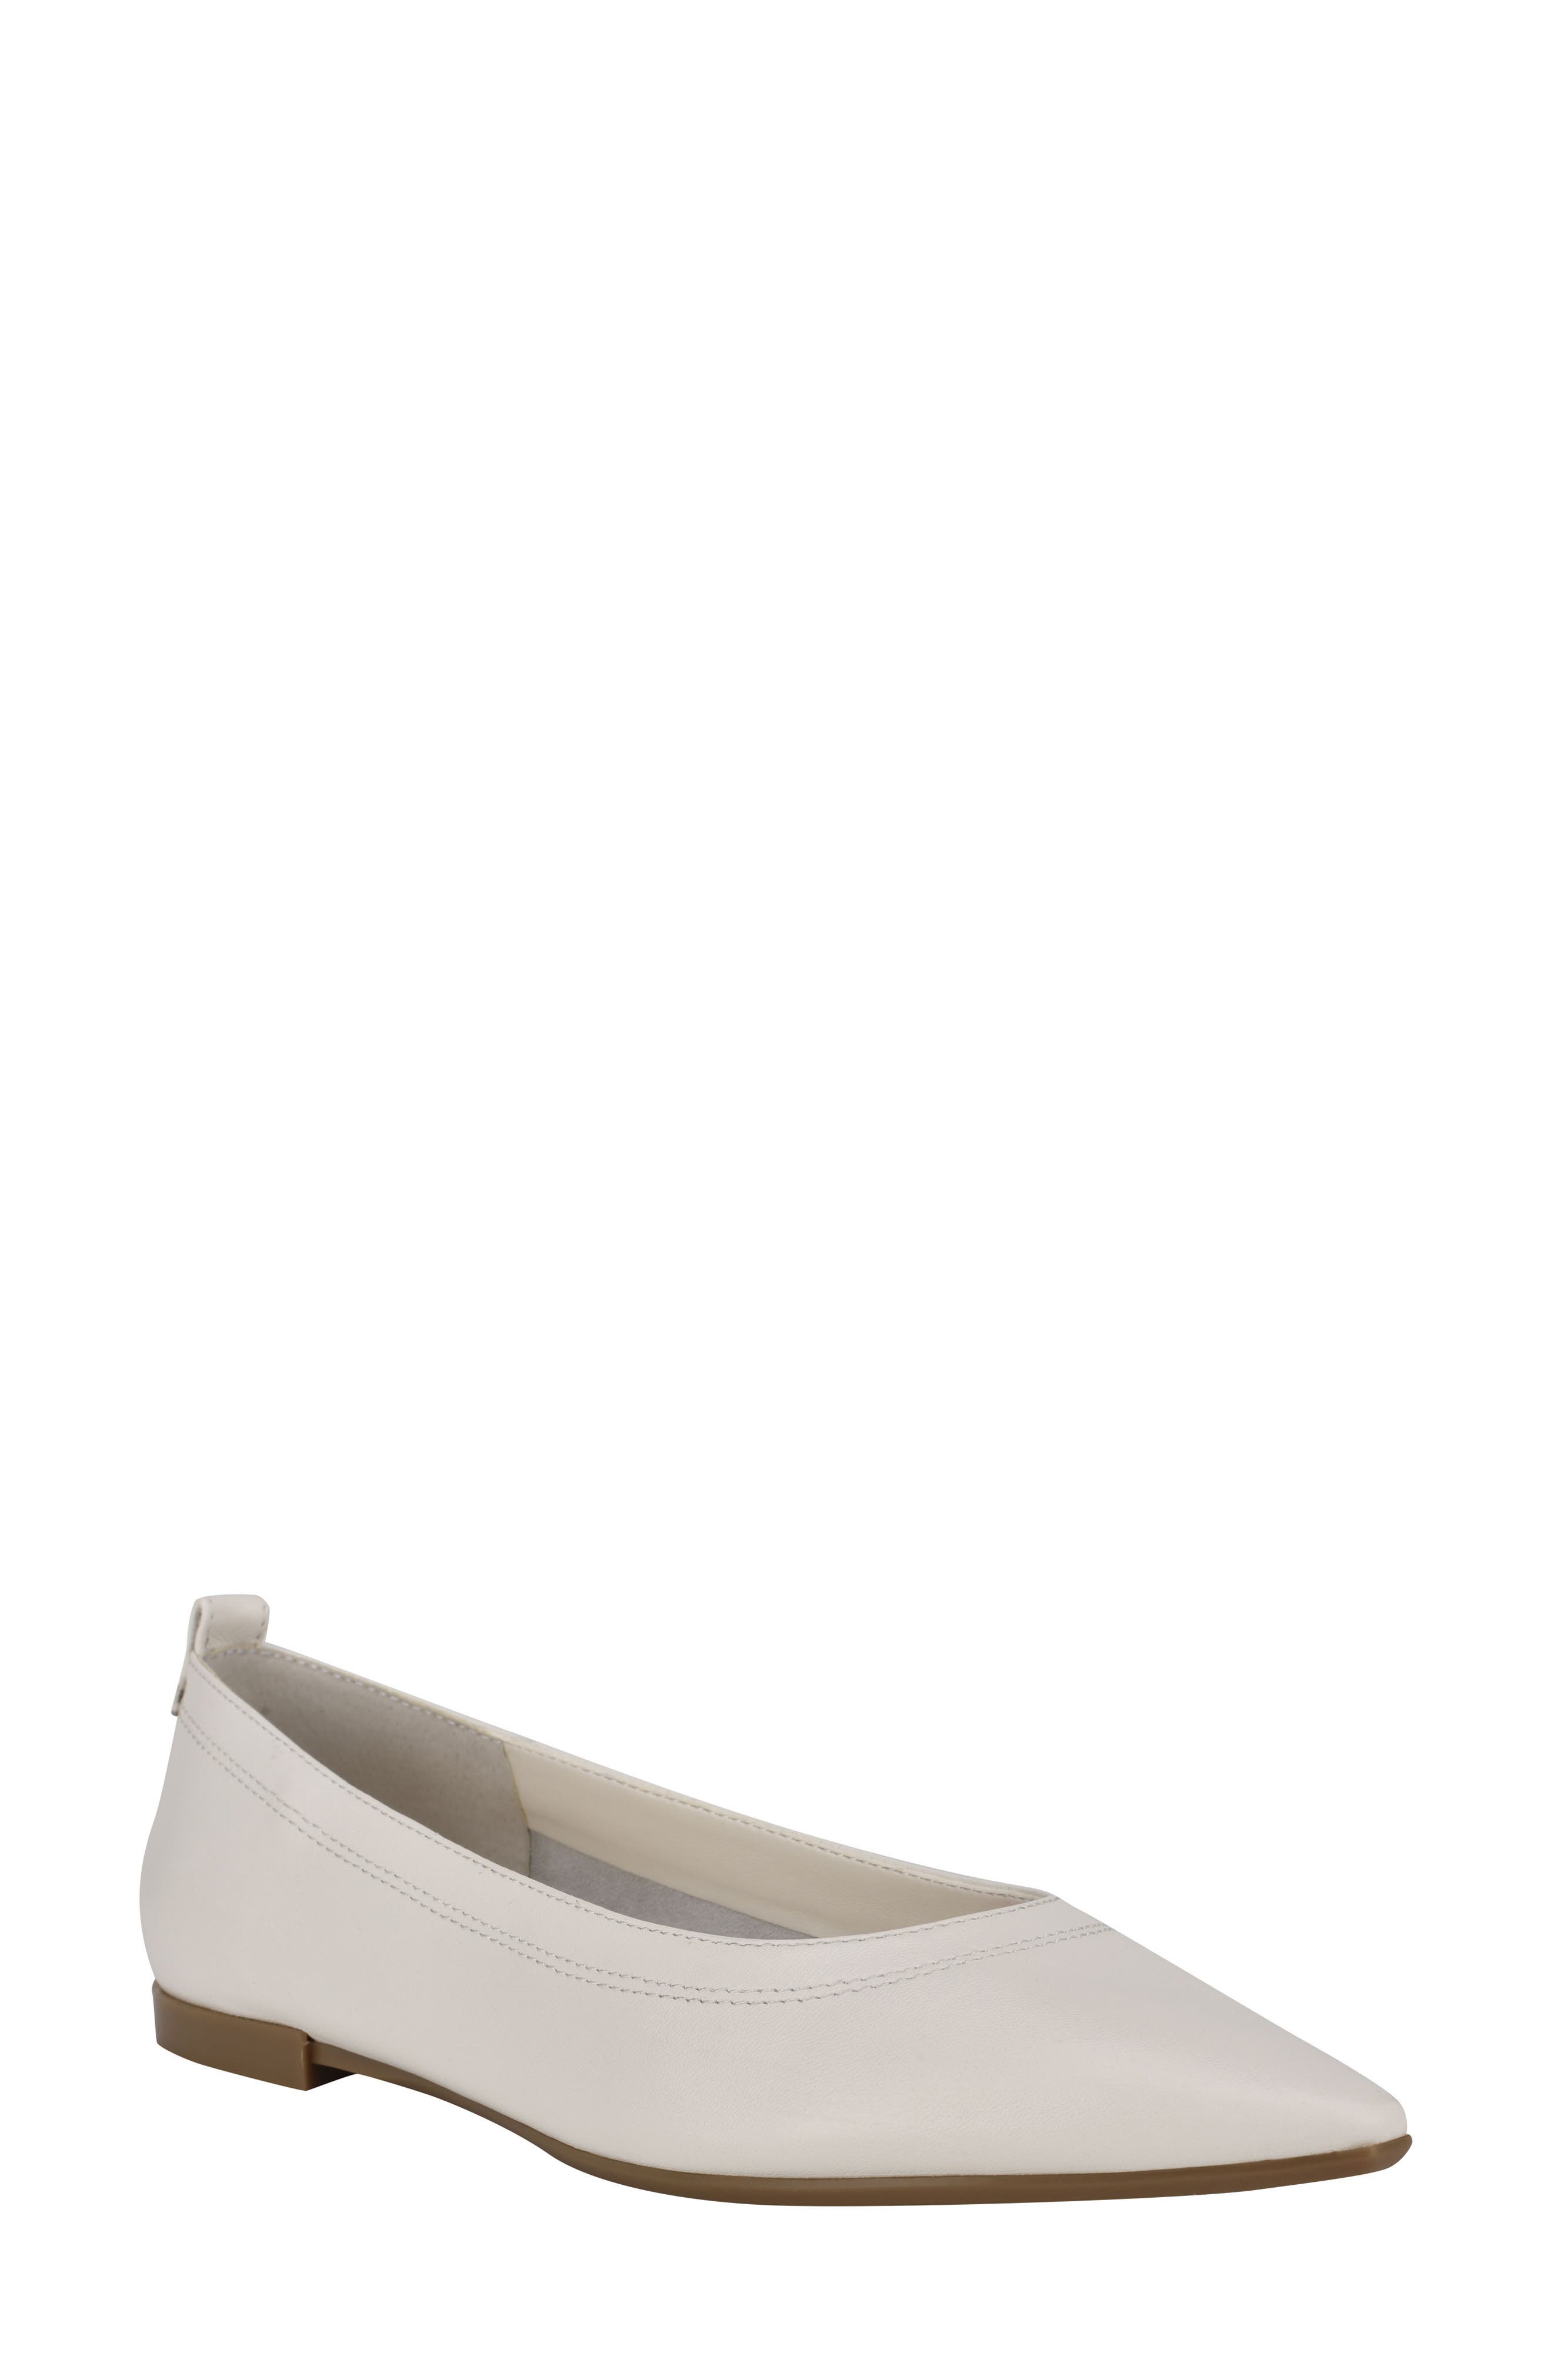 UPC 195182395430 product image for Women's Calvin Klein Raya Pointed Toe Flat, Size 7.5 M - Ivory | upcitemdb.com